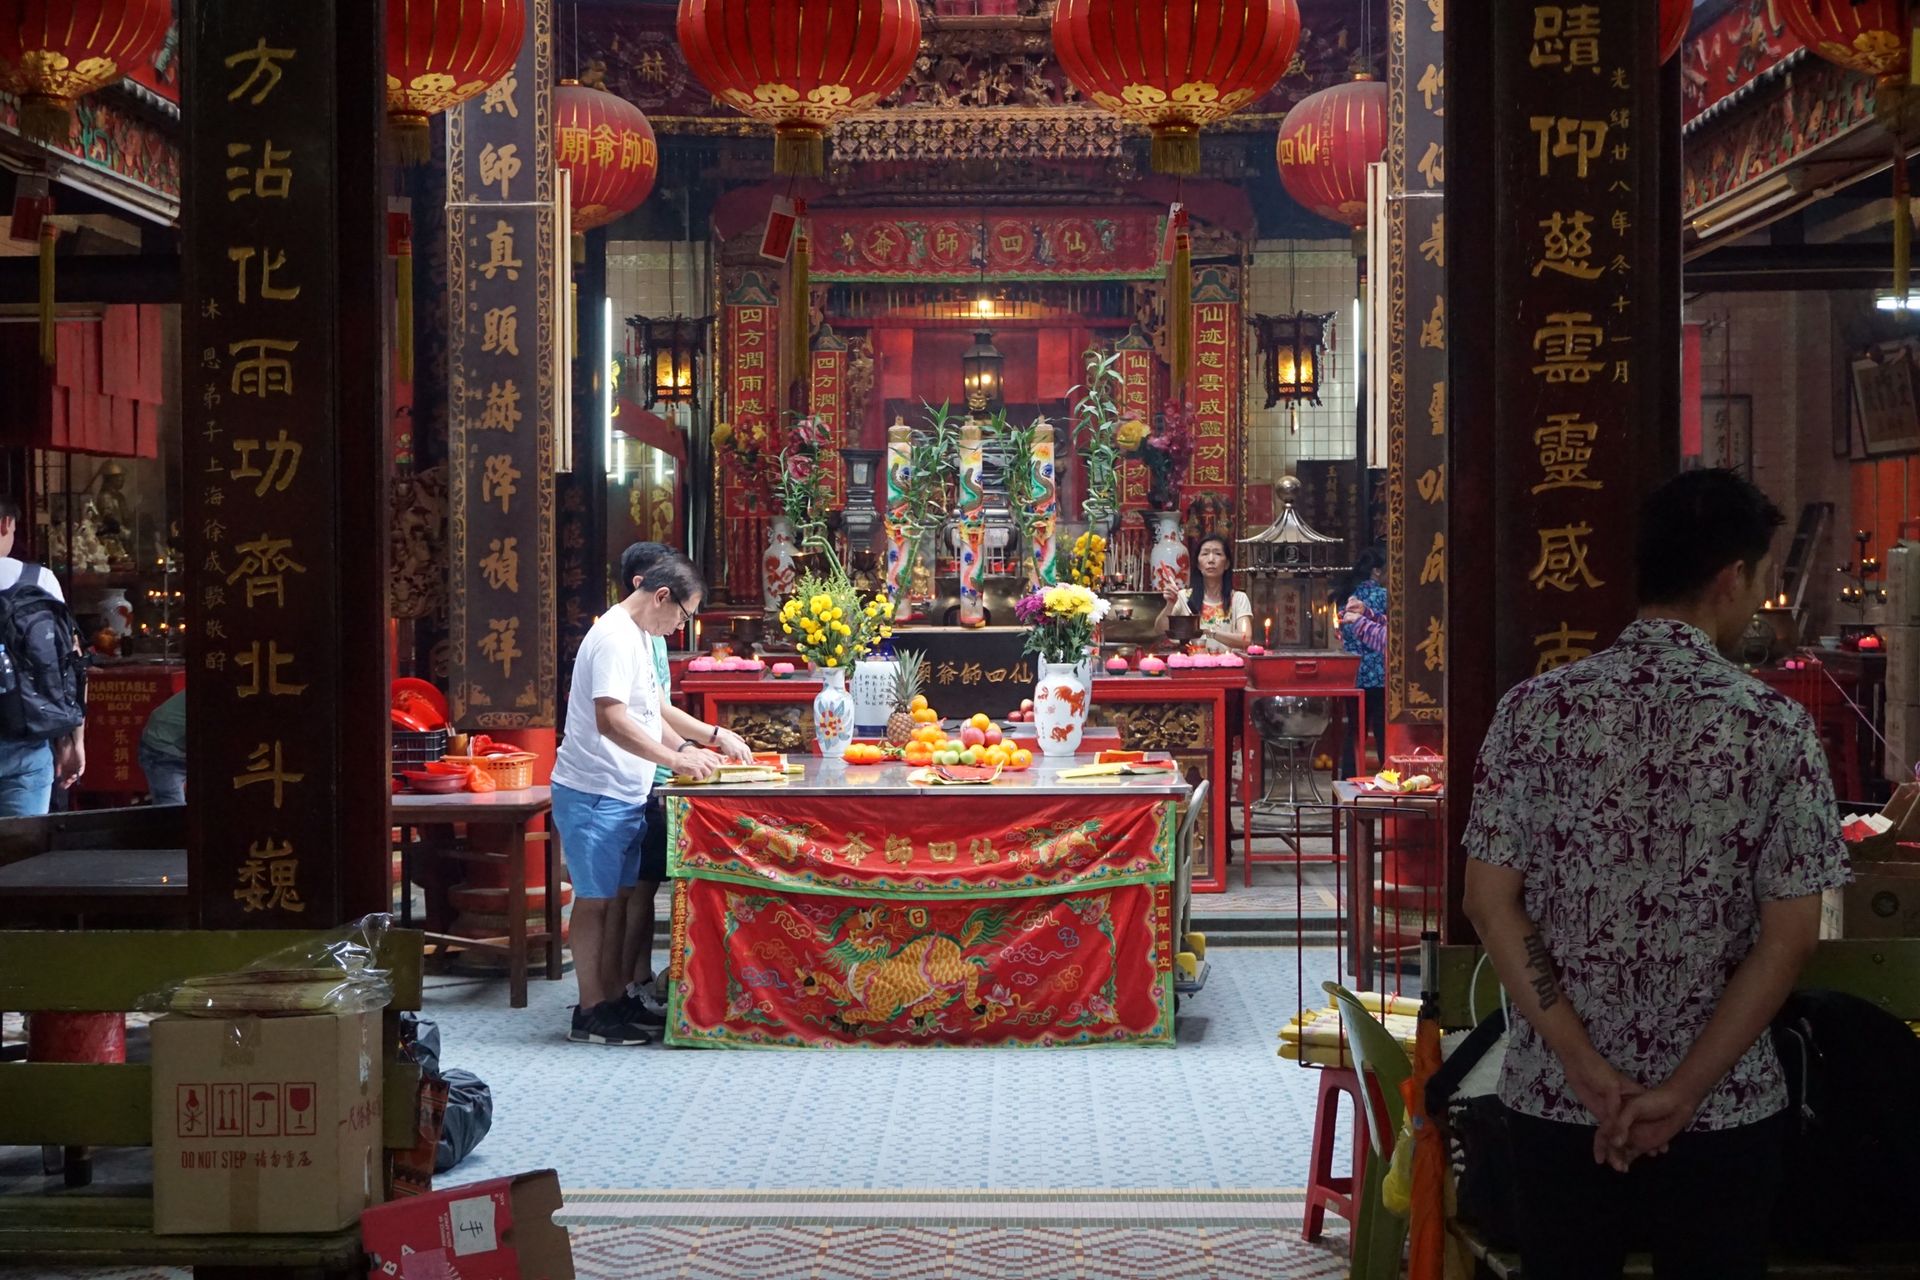 Oldest Taoist temple in the city (Sin Sze Si Ya temple)